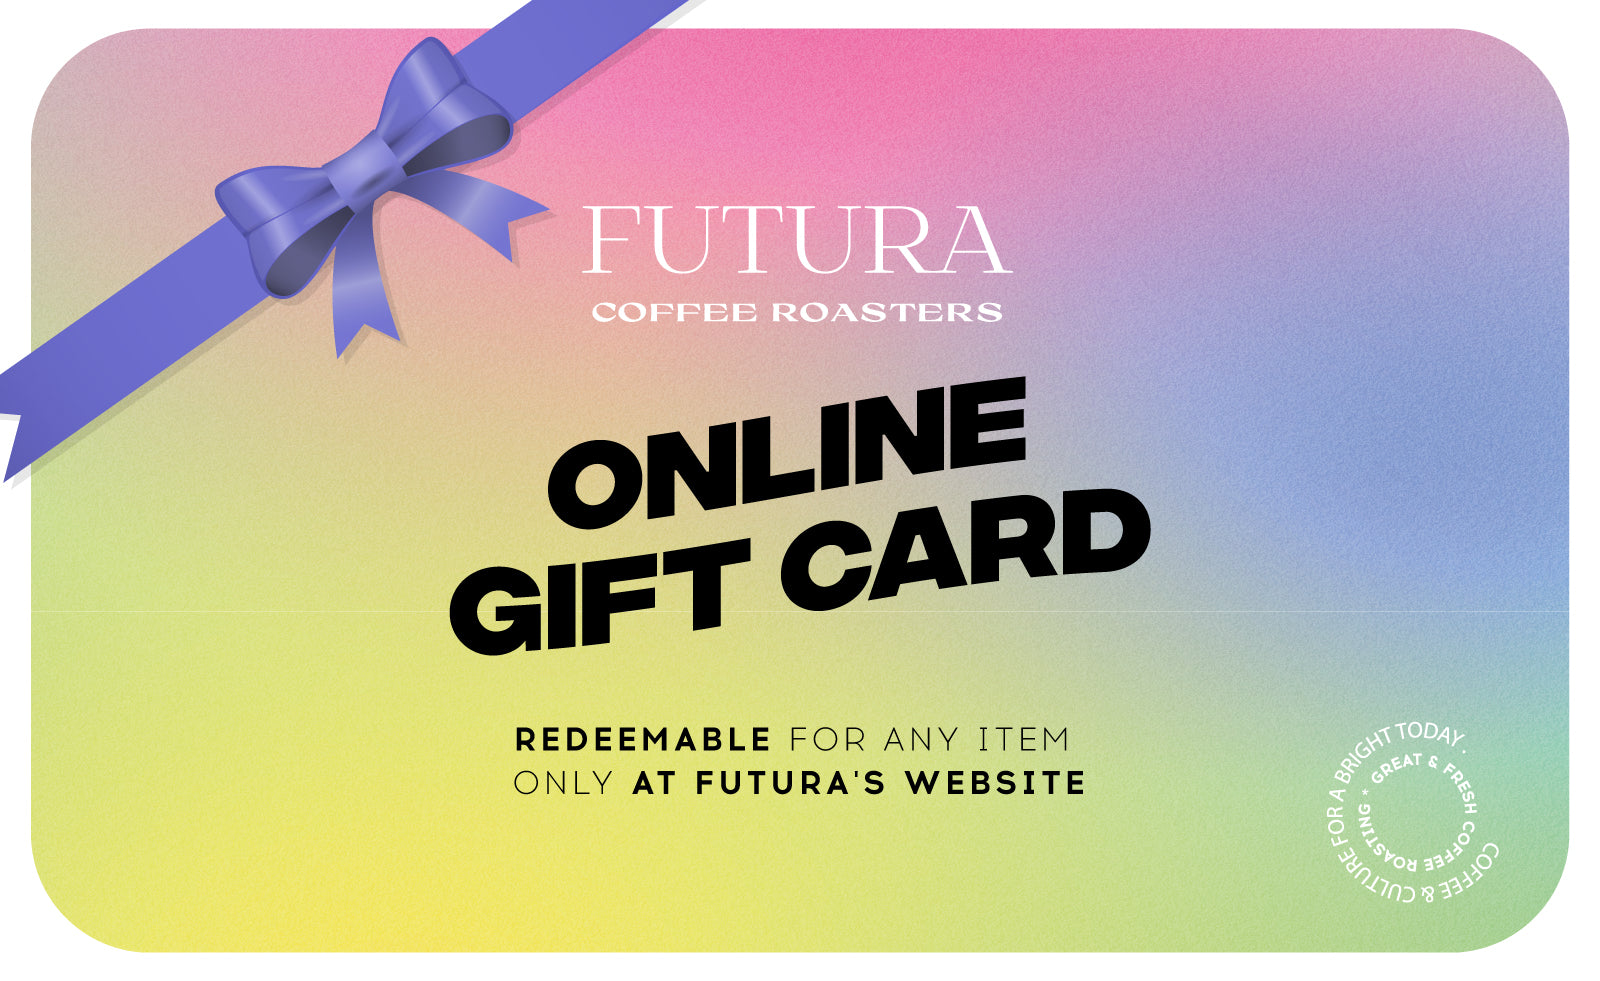 Futura's Gift Card